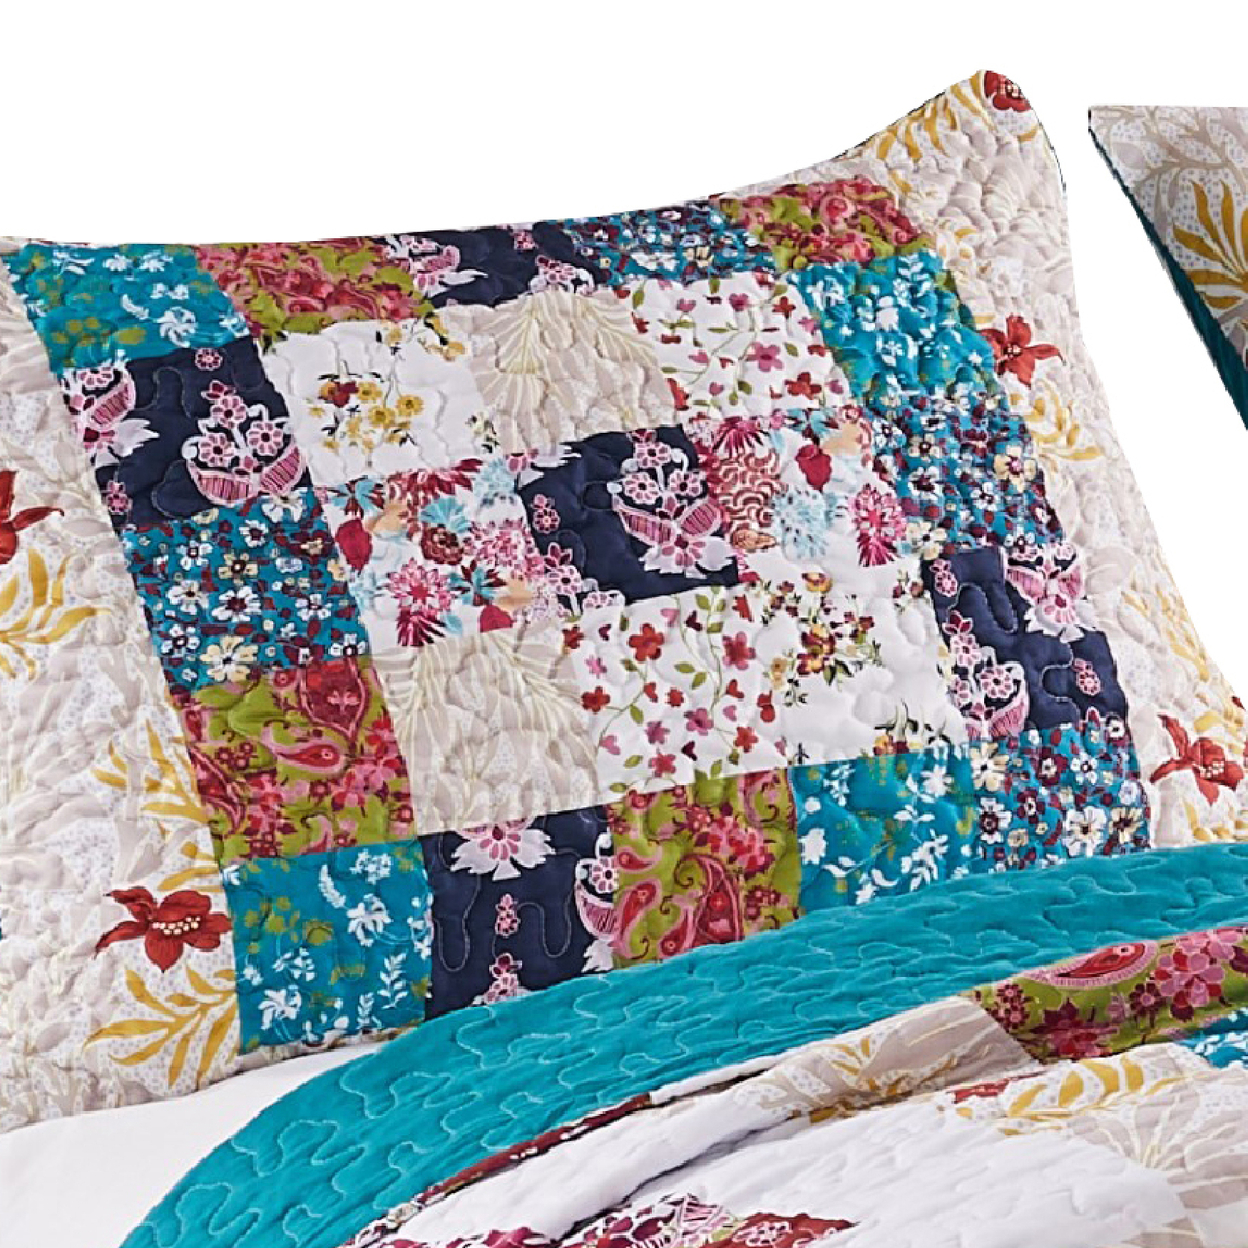 Zay 36 Inch King Pillow Sham, Patchwork Floral Print, Teal Blue Microfiber- Saltoro Sherpi